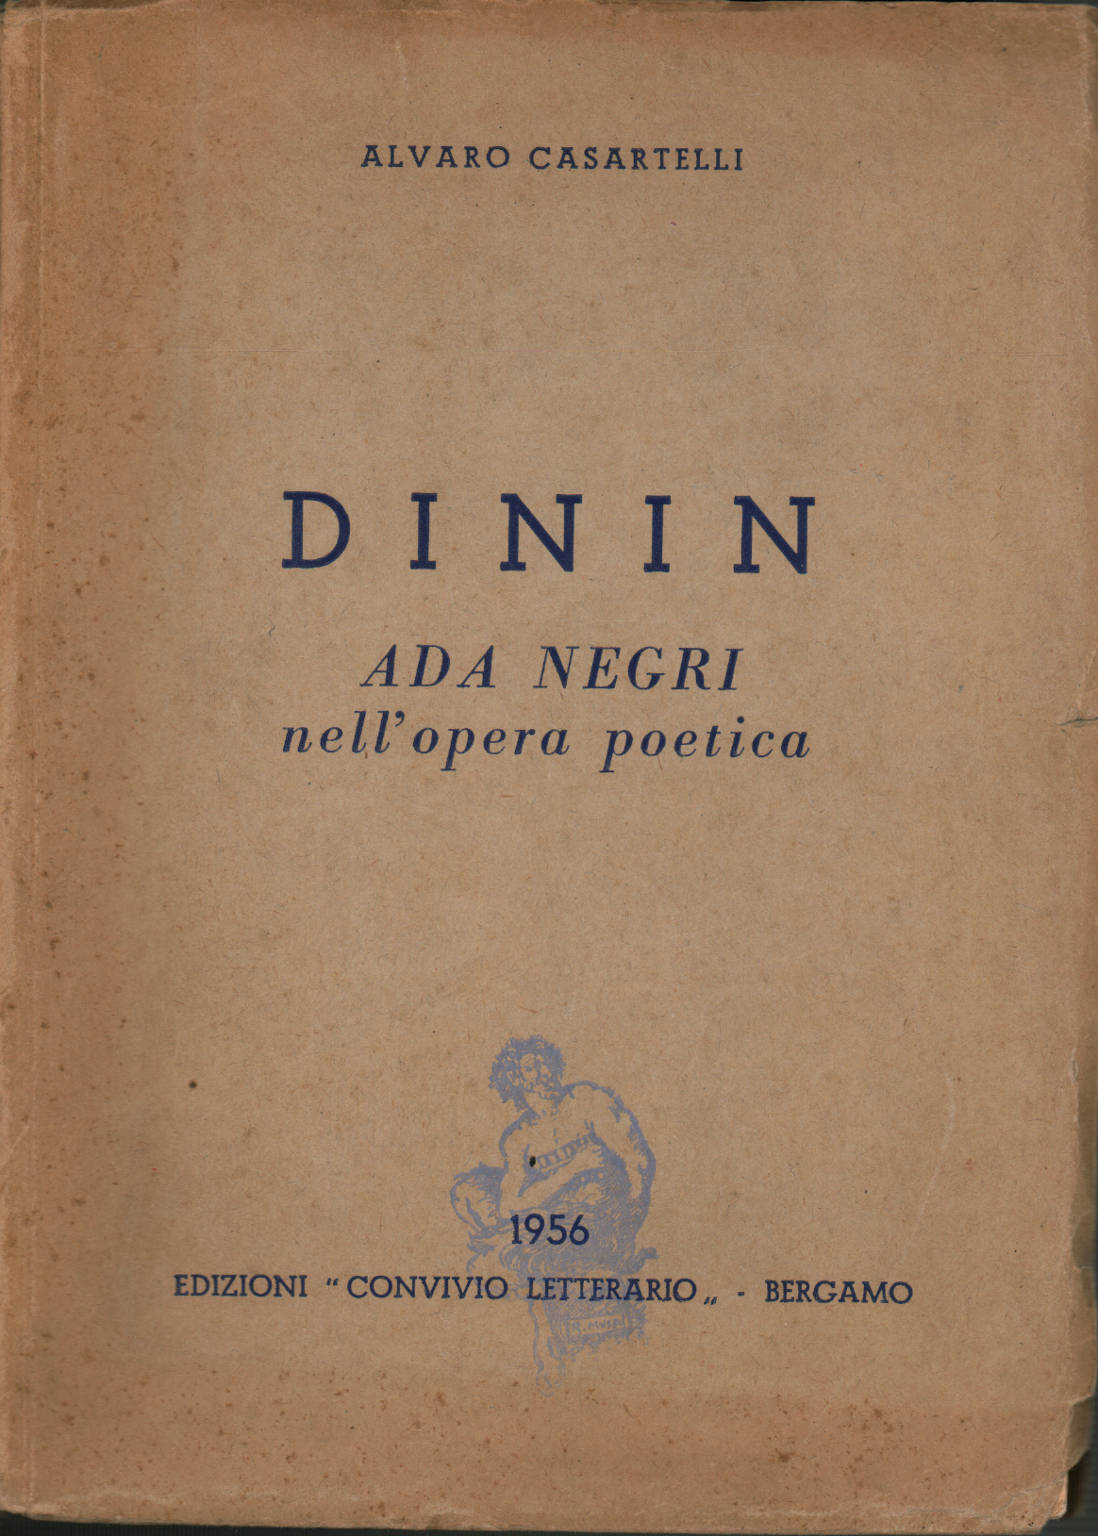 Dinin. Ada Negri in her poetic work, s.a.